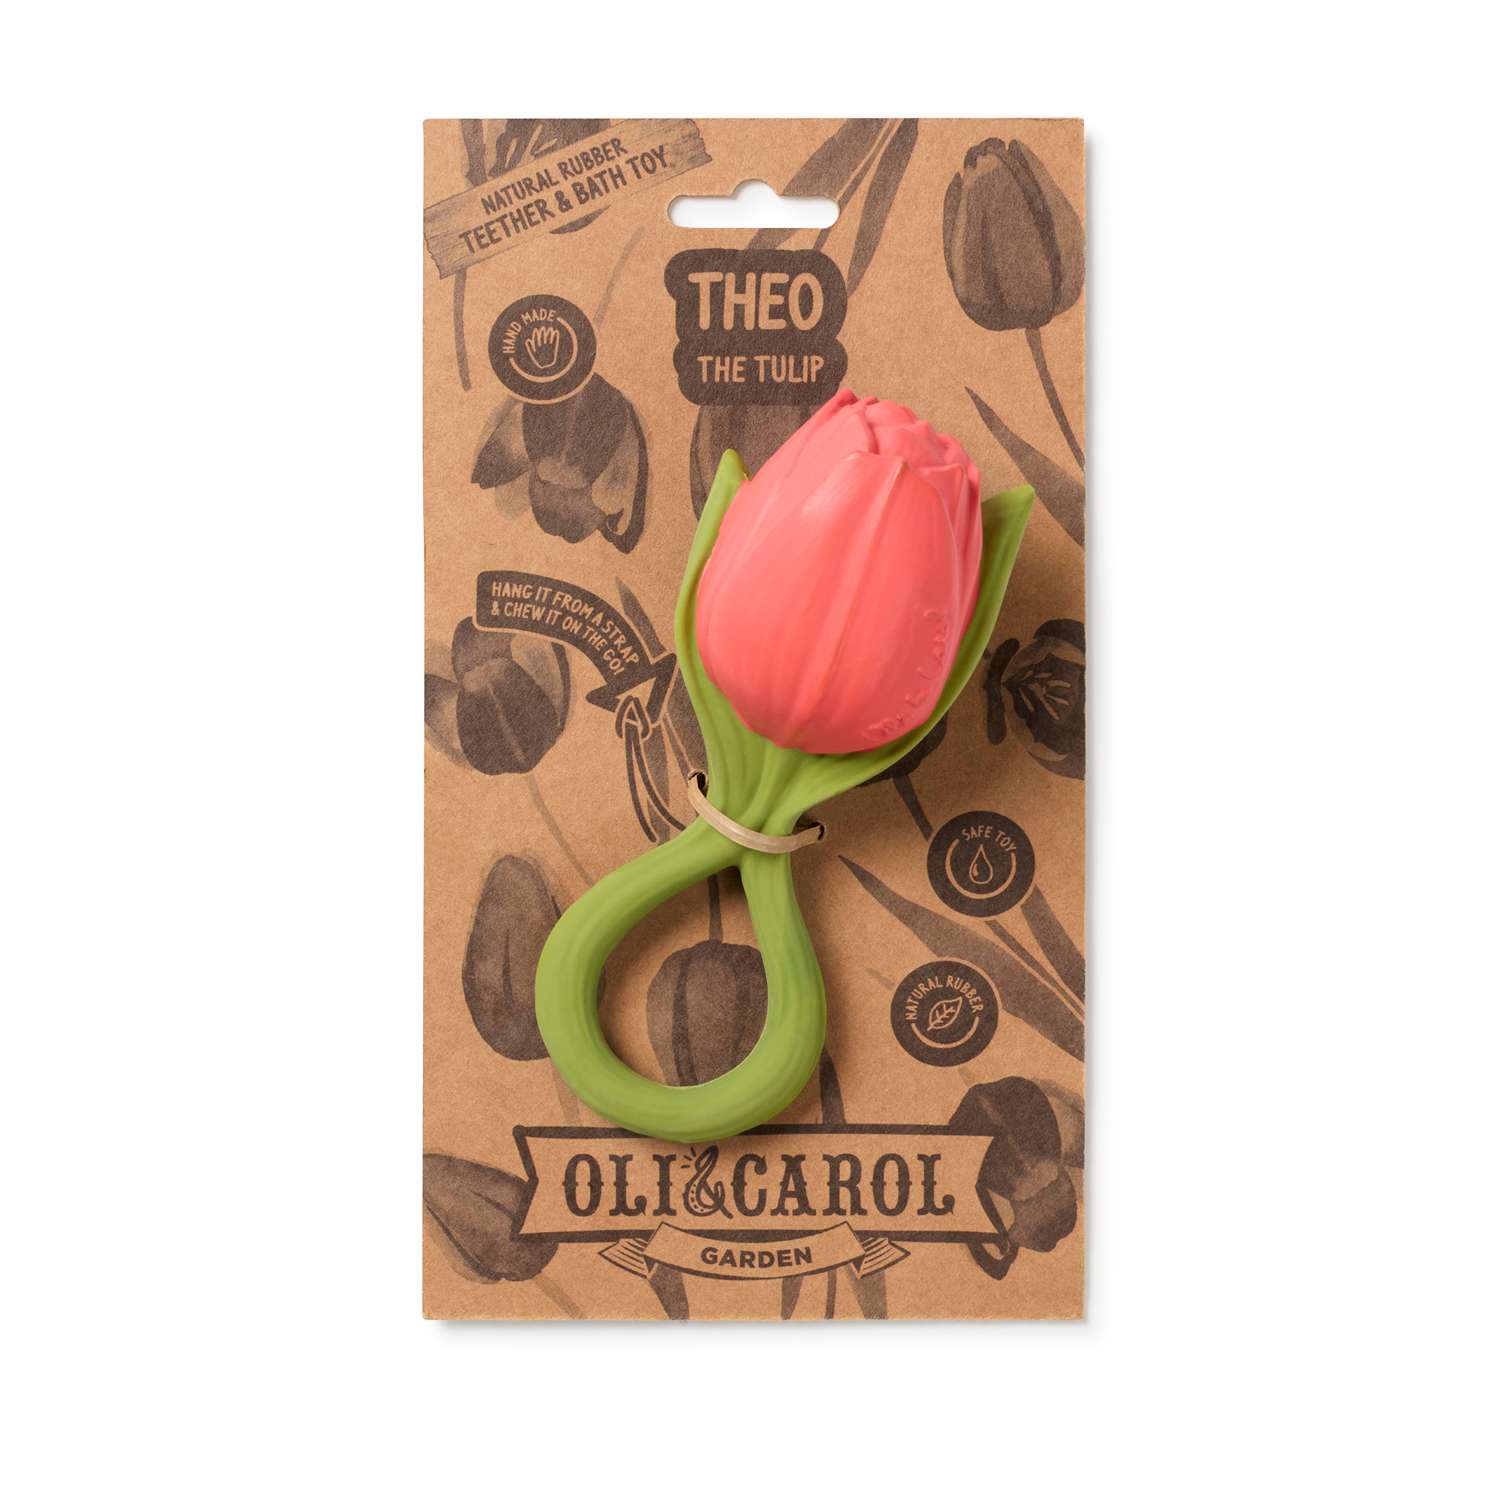 Прорезыватель грызунок OLI and CAROL Theo the Tulip из натурального каучука - фото 2